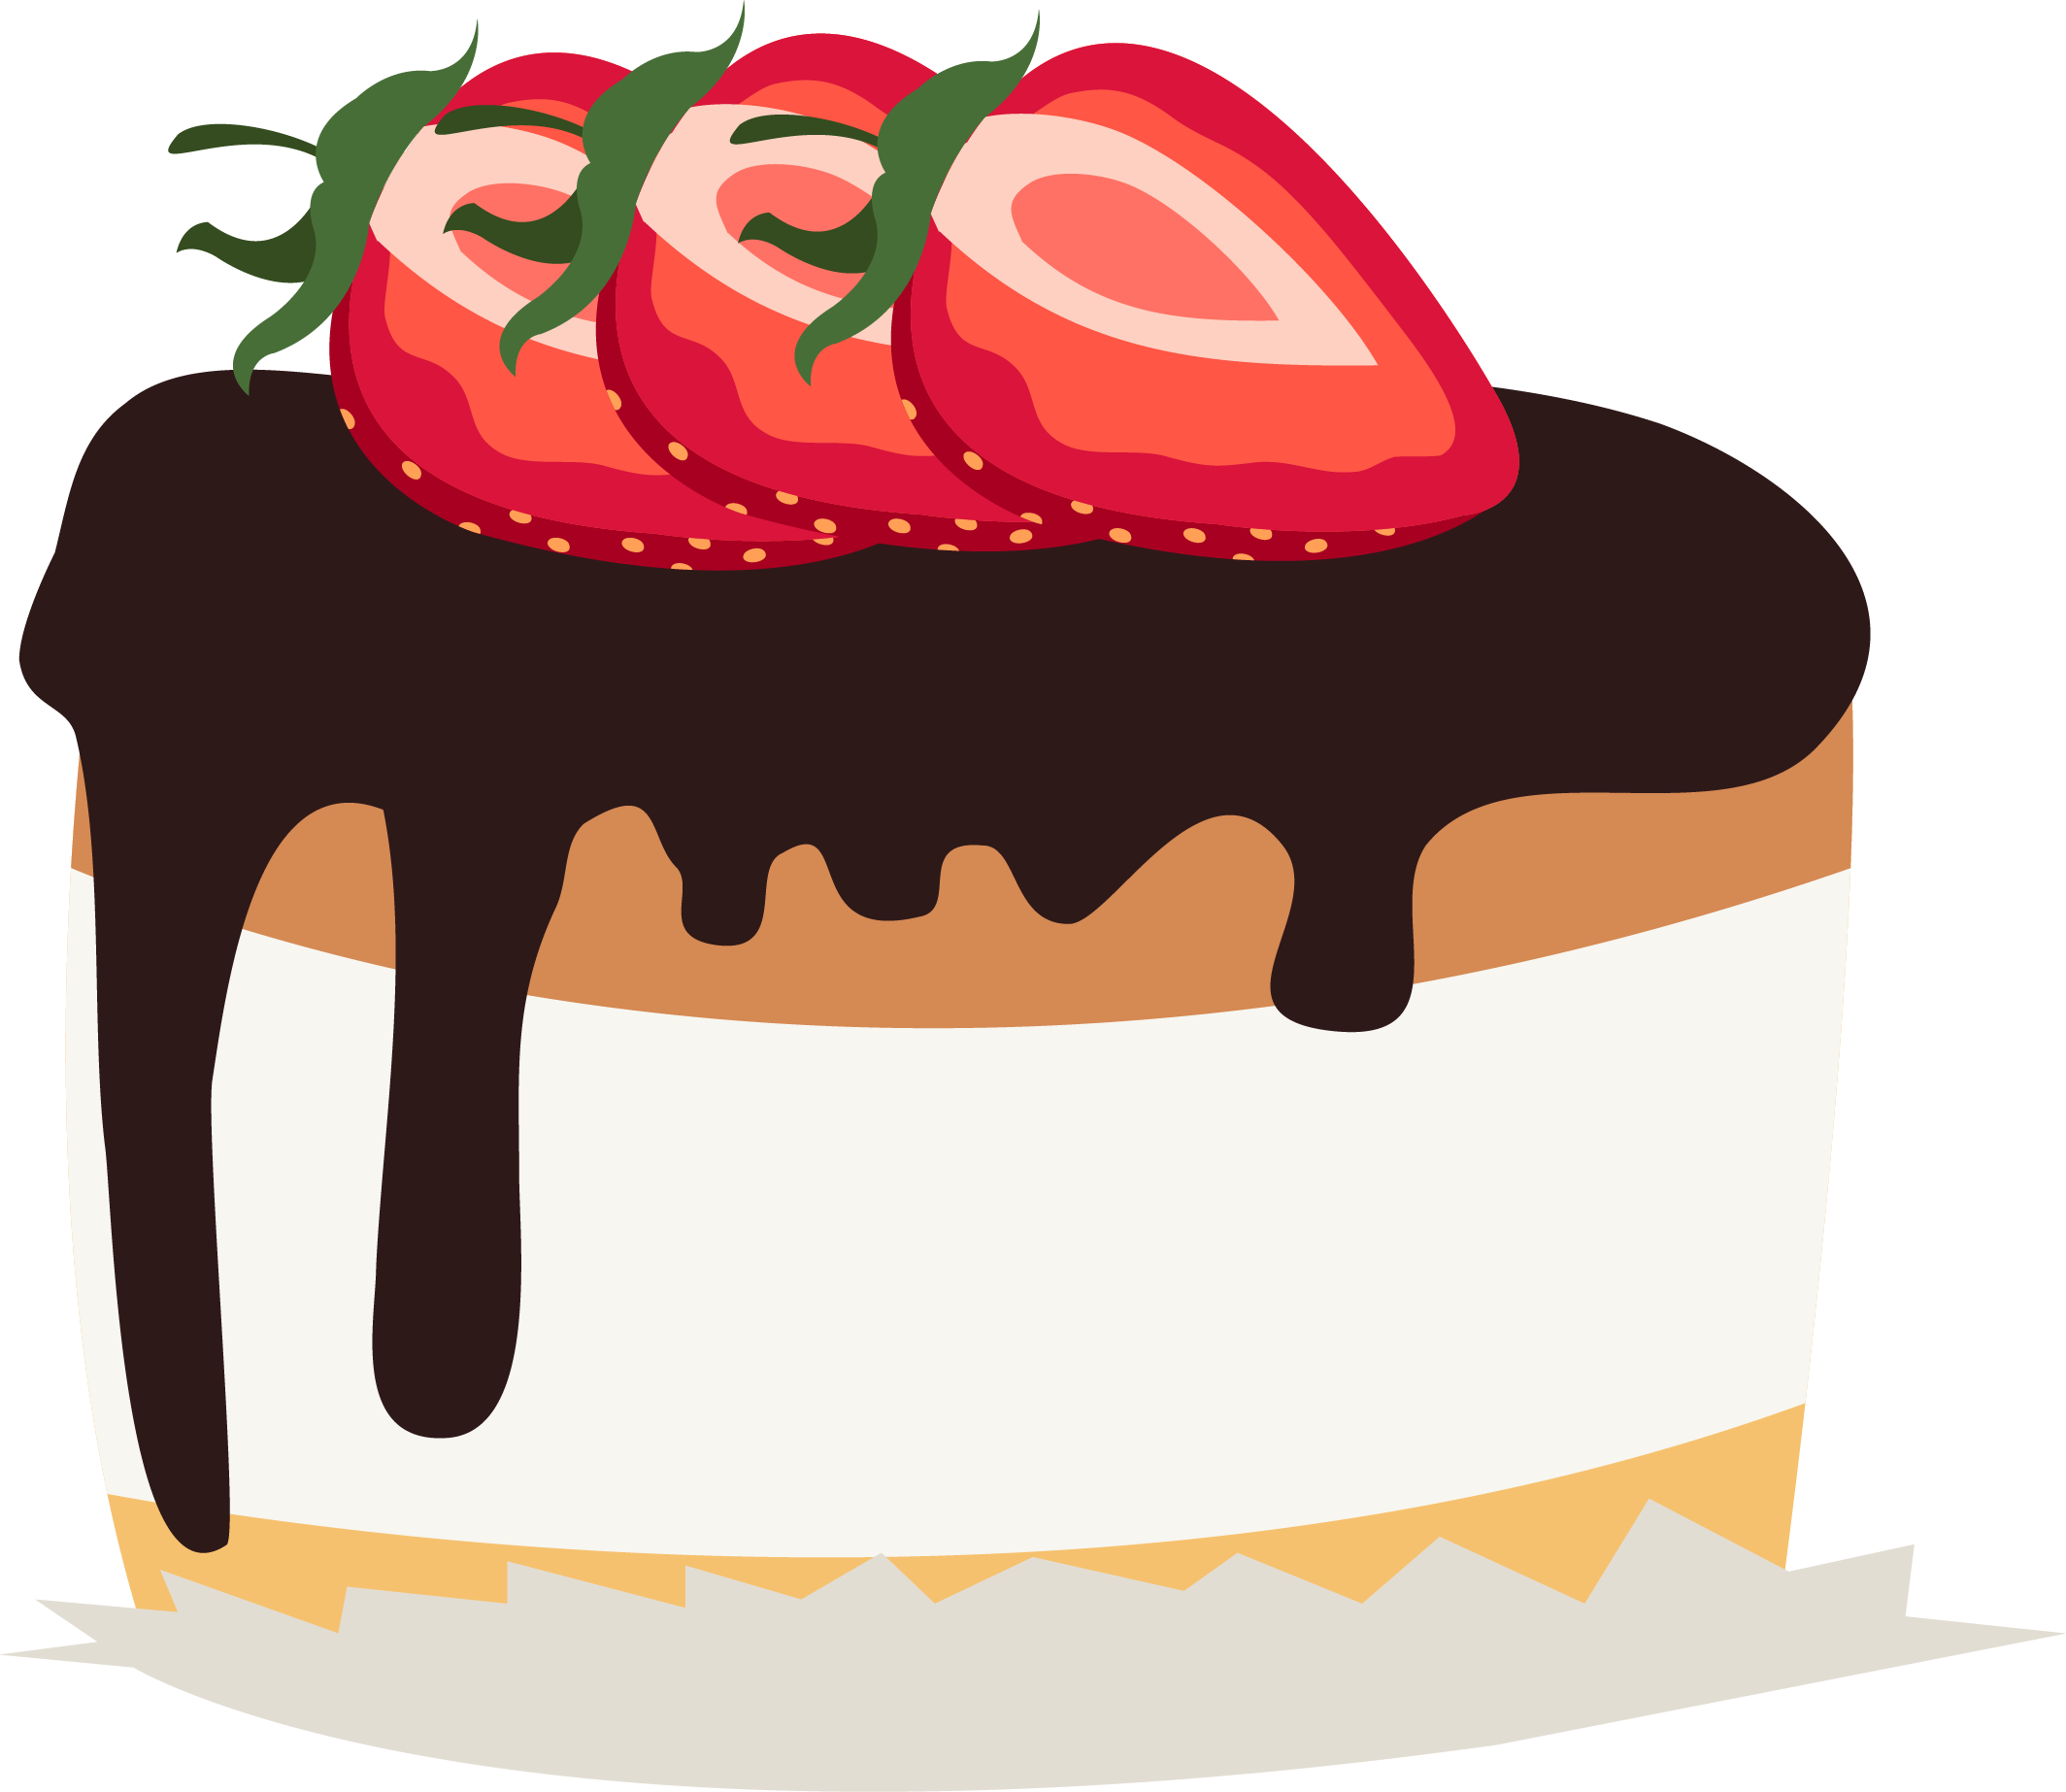 Chocolate strawberry cream birthday. Desserts clipart cake biscuit